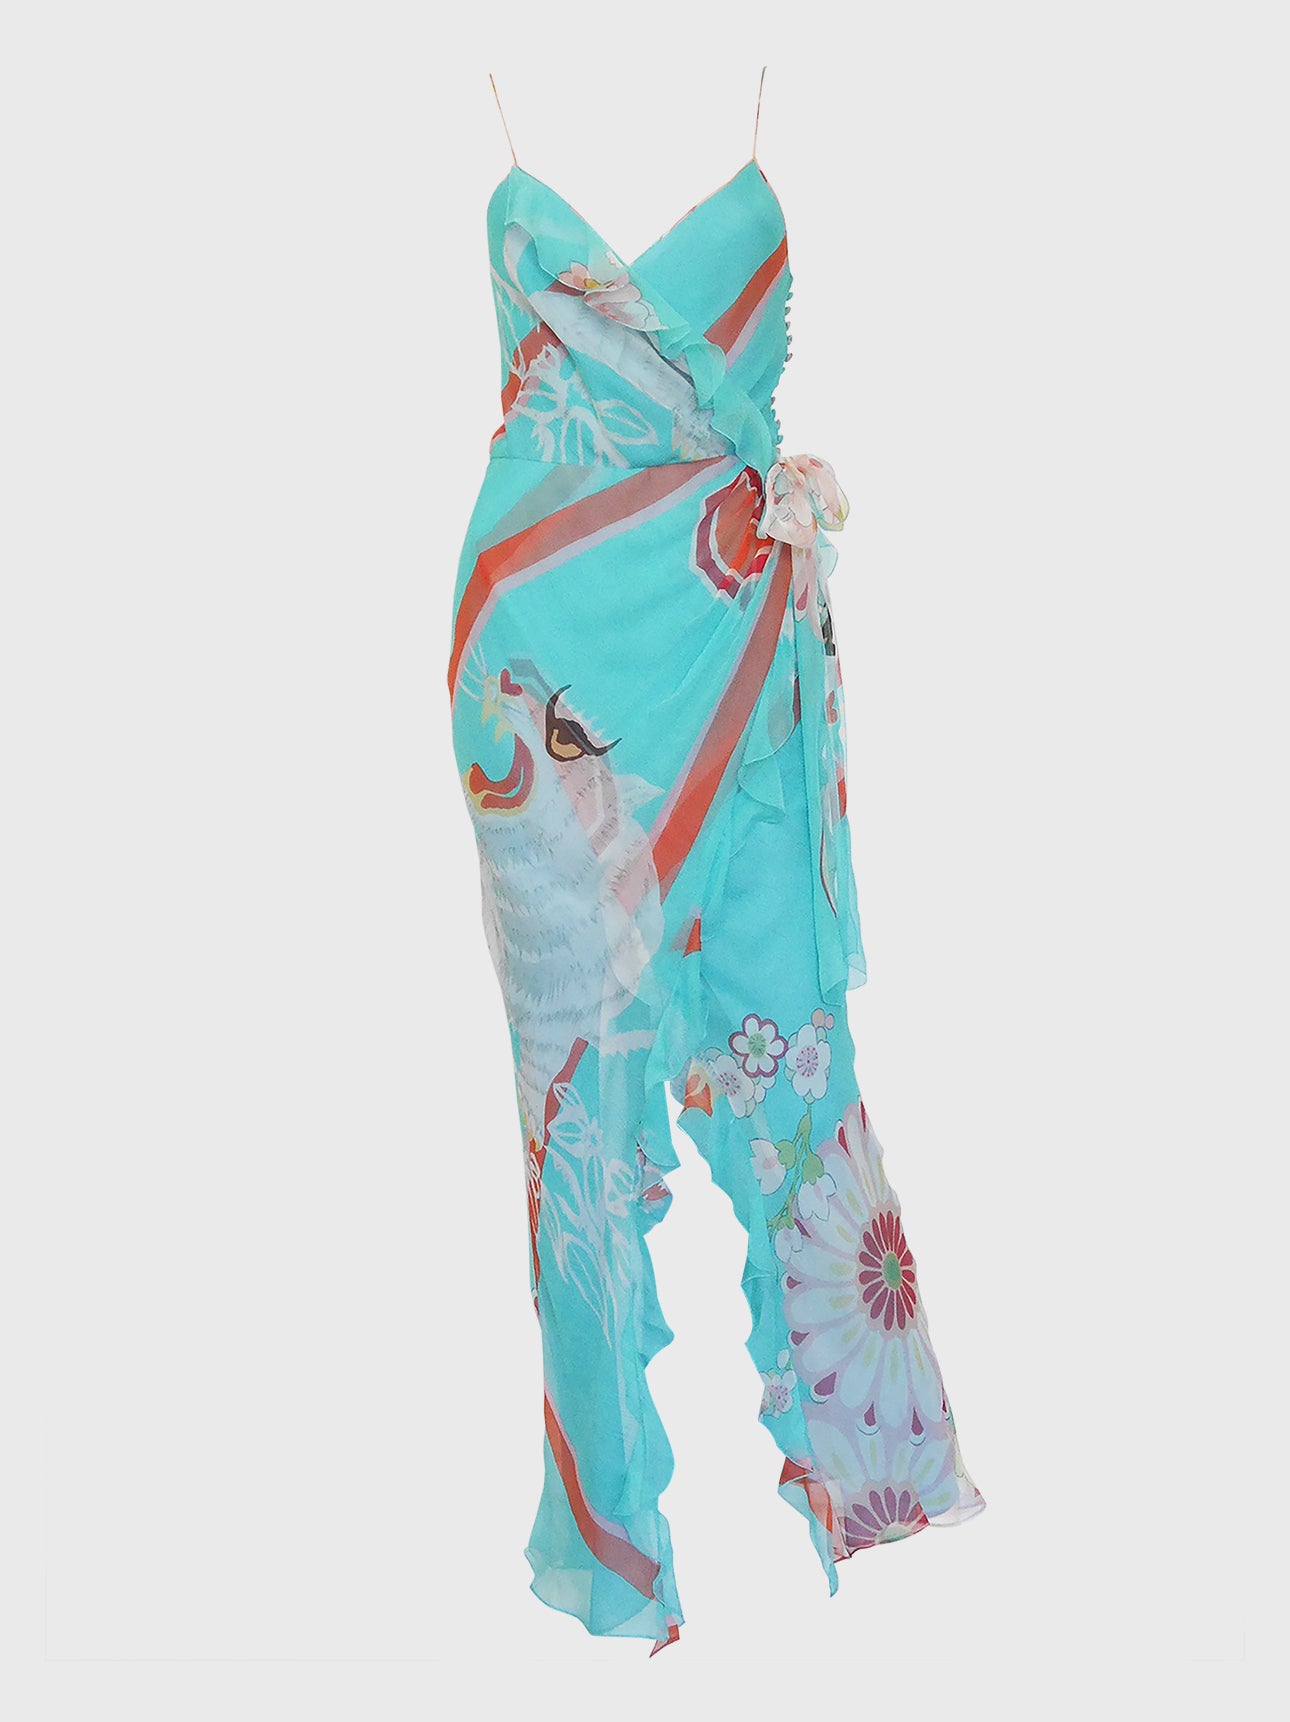 CHRISTIAN DIOR by John Galliano Fall 2003 Vintage Ruffled Silk Evening Dress